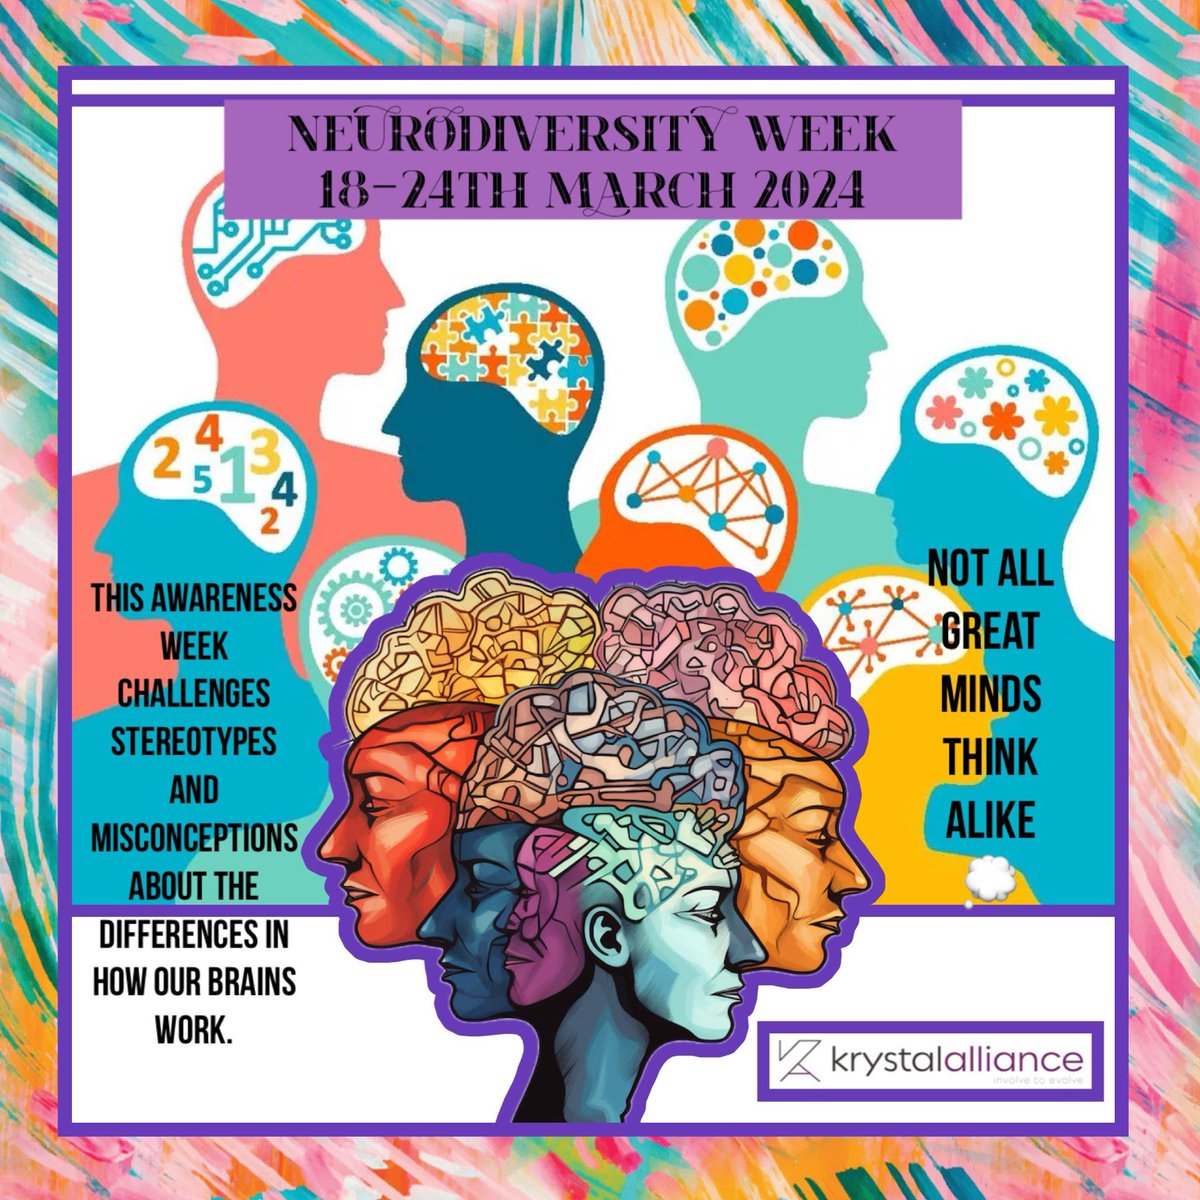 Neurodiversity Week 18-24th March 2024 🩷❤️🧡💛💚🩵💙💜🤎🖤🩶🤍 “Not all great minds think alike” 💭 #NeurodiversityWeek #Neurodiversity #NeurodiversityCelebrationWeek #DifferentMinds #CelebratingNeurodiversity